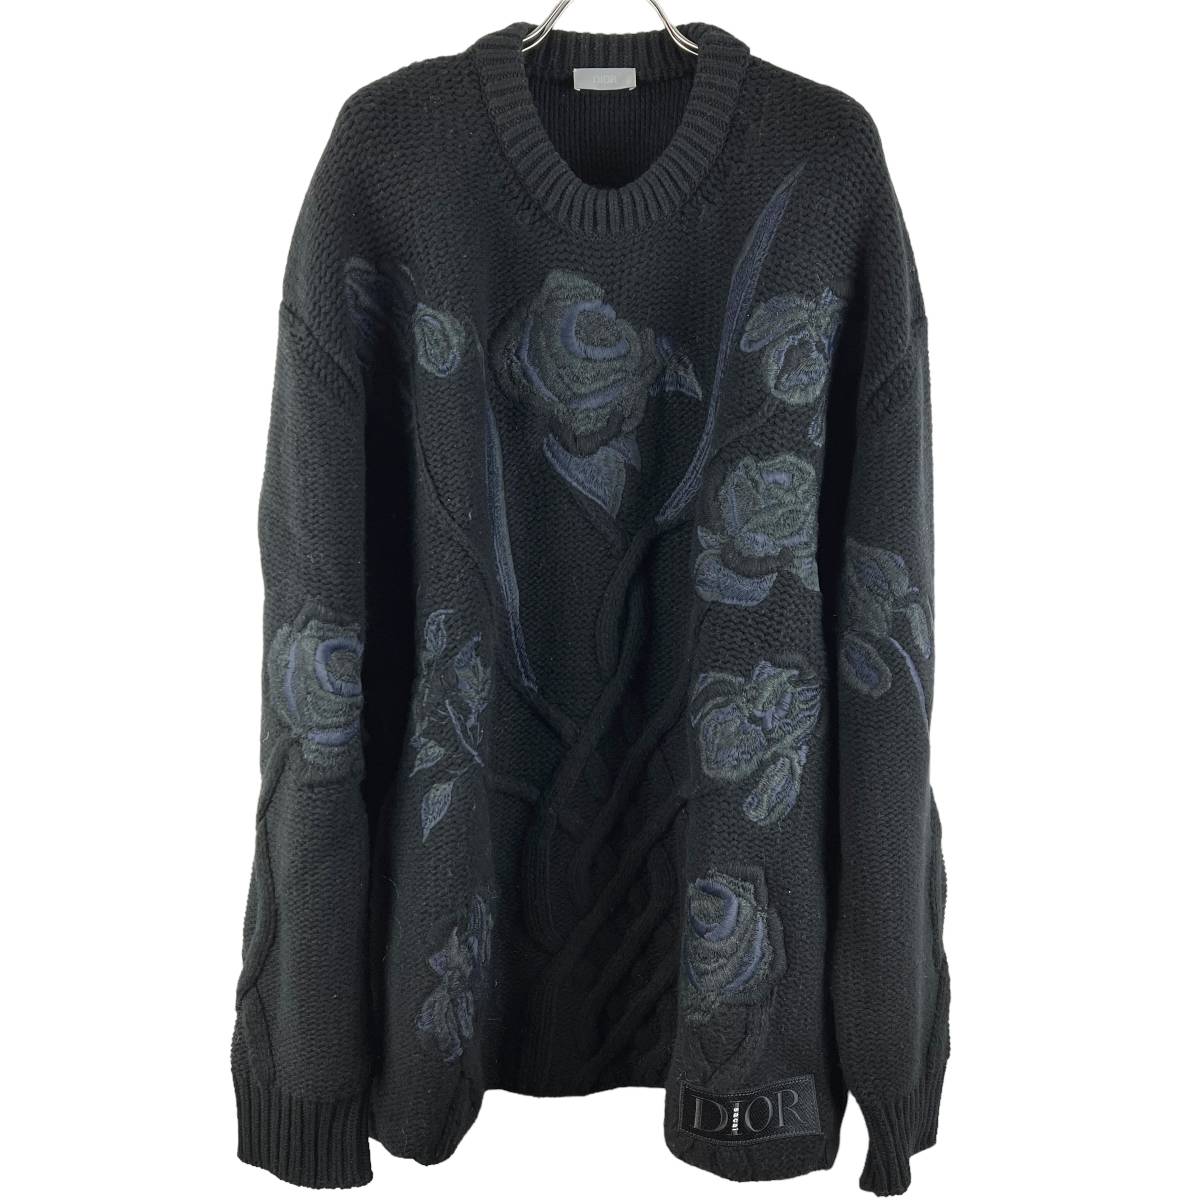 Dior (ディオール) x Sacai (サカイ) Over Size Wool & Cashmere Flower Pattern Design Knit Sweater (black)